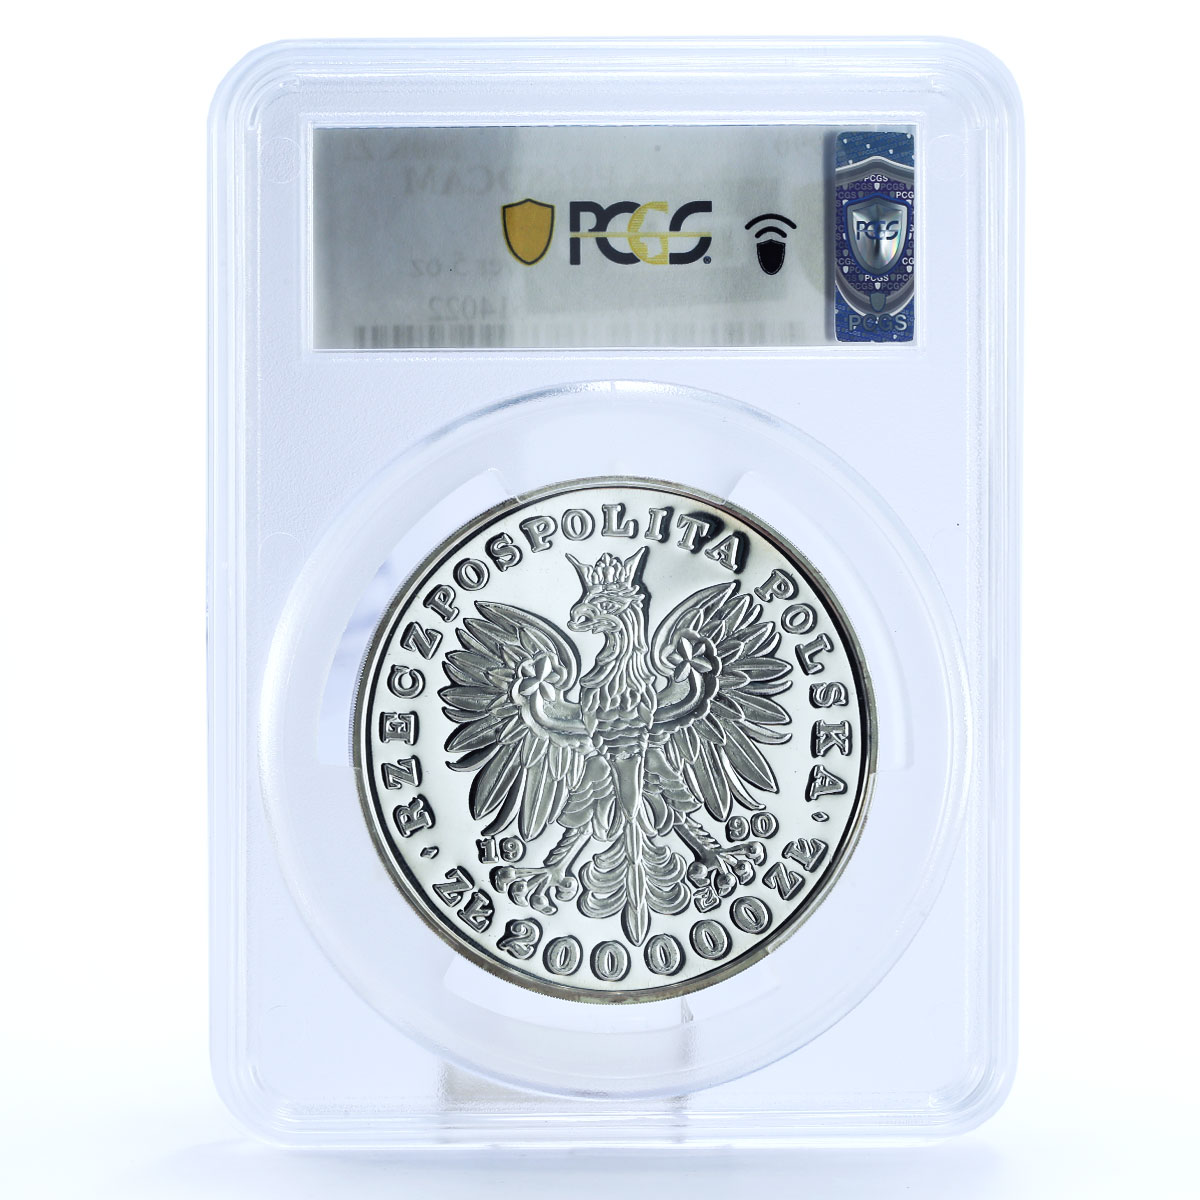 Poland 200000 zlotych Tadeusz Kosciuszko PR68 PCGS silver coin 1990